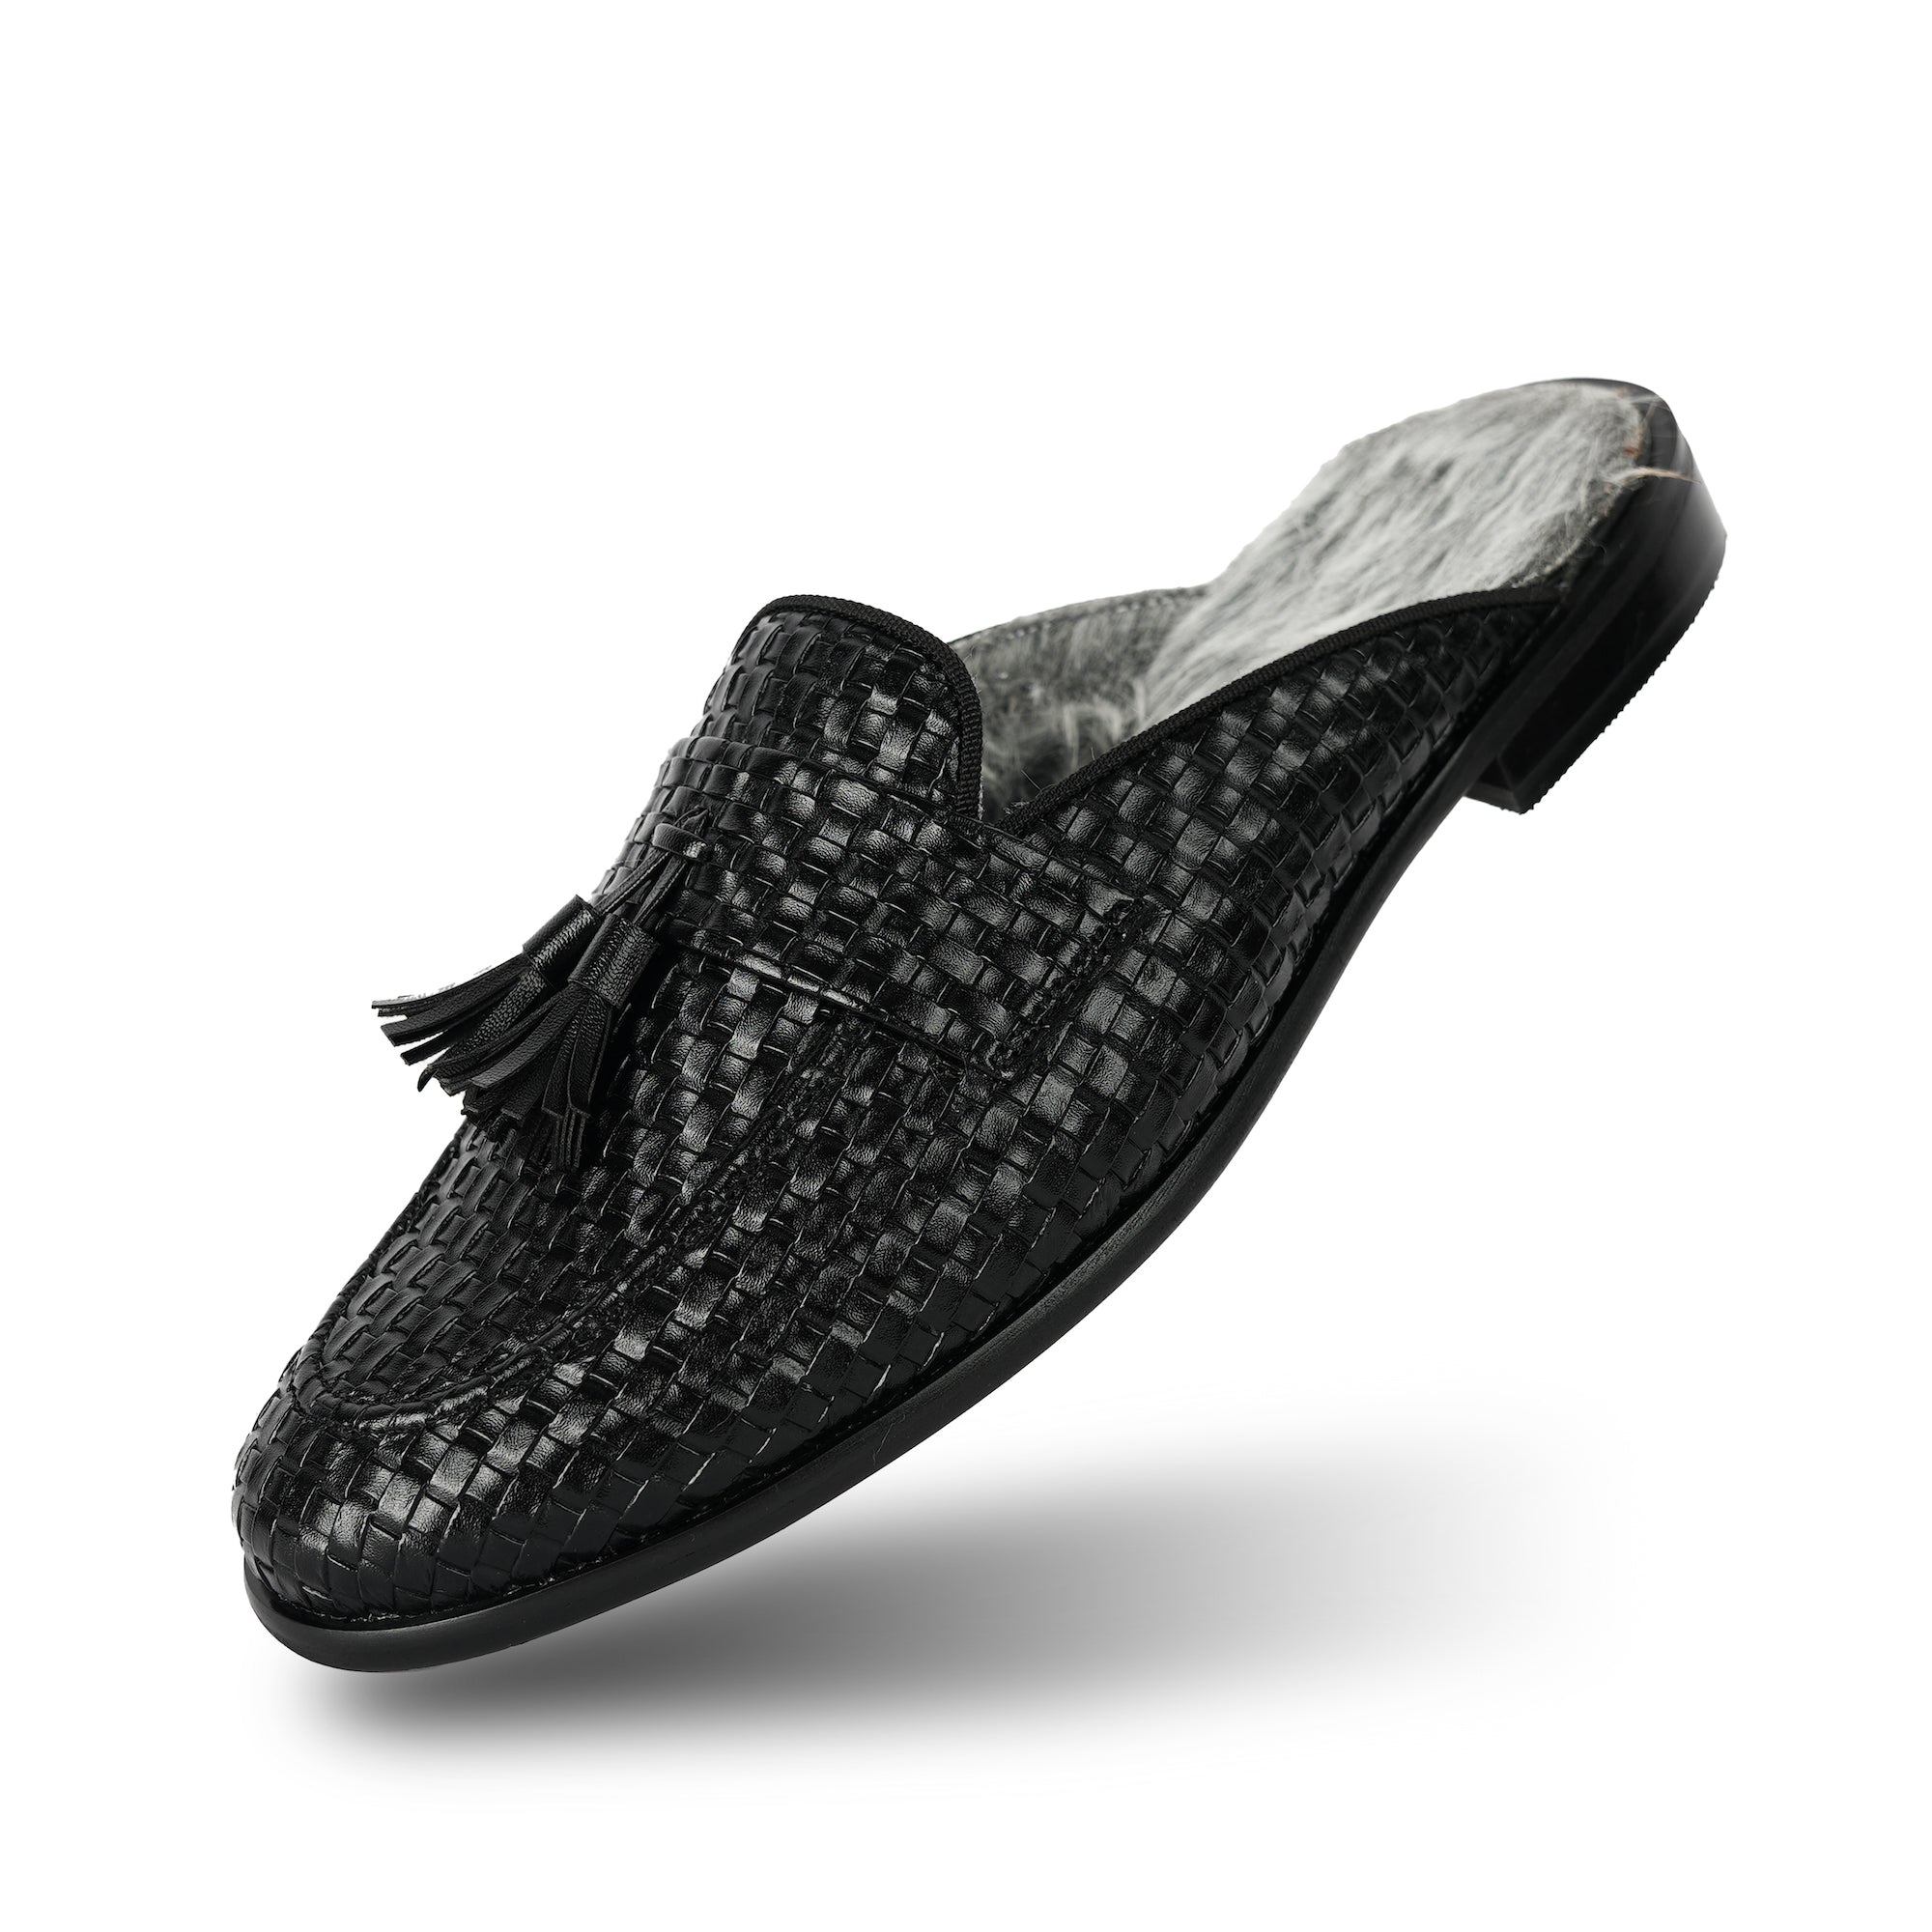 Luxious Mule Shoes With Fur Insoles - Black